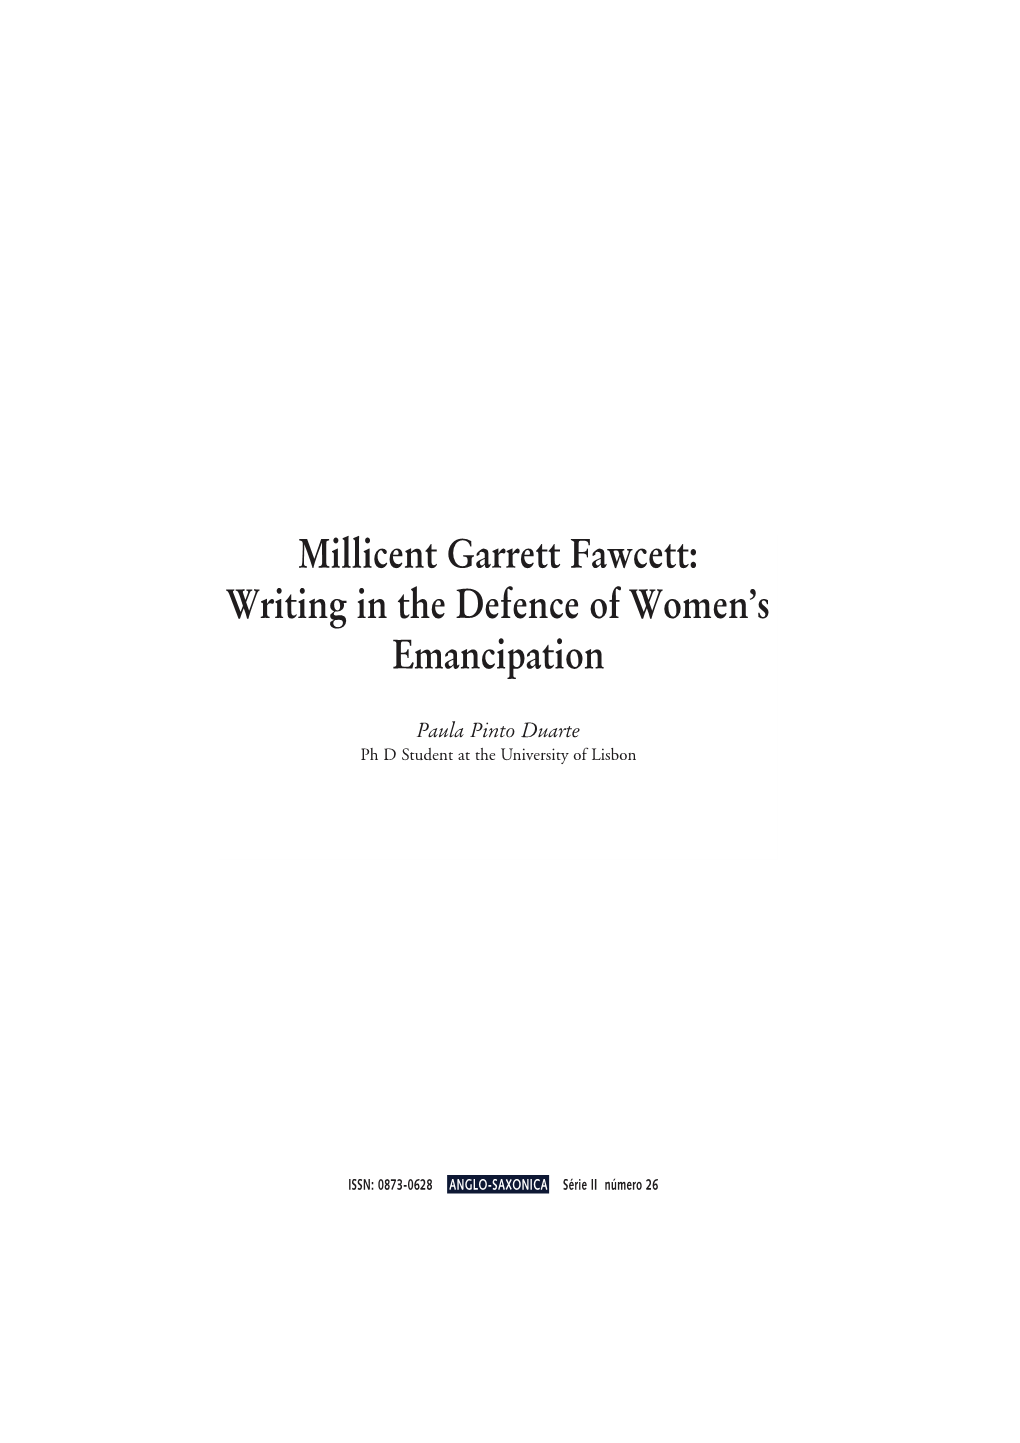 Millicent Garrett Fawcett: Writing in the Defence of Women's Emancipation